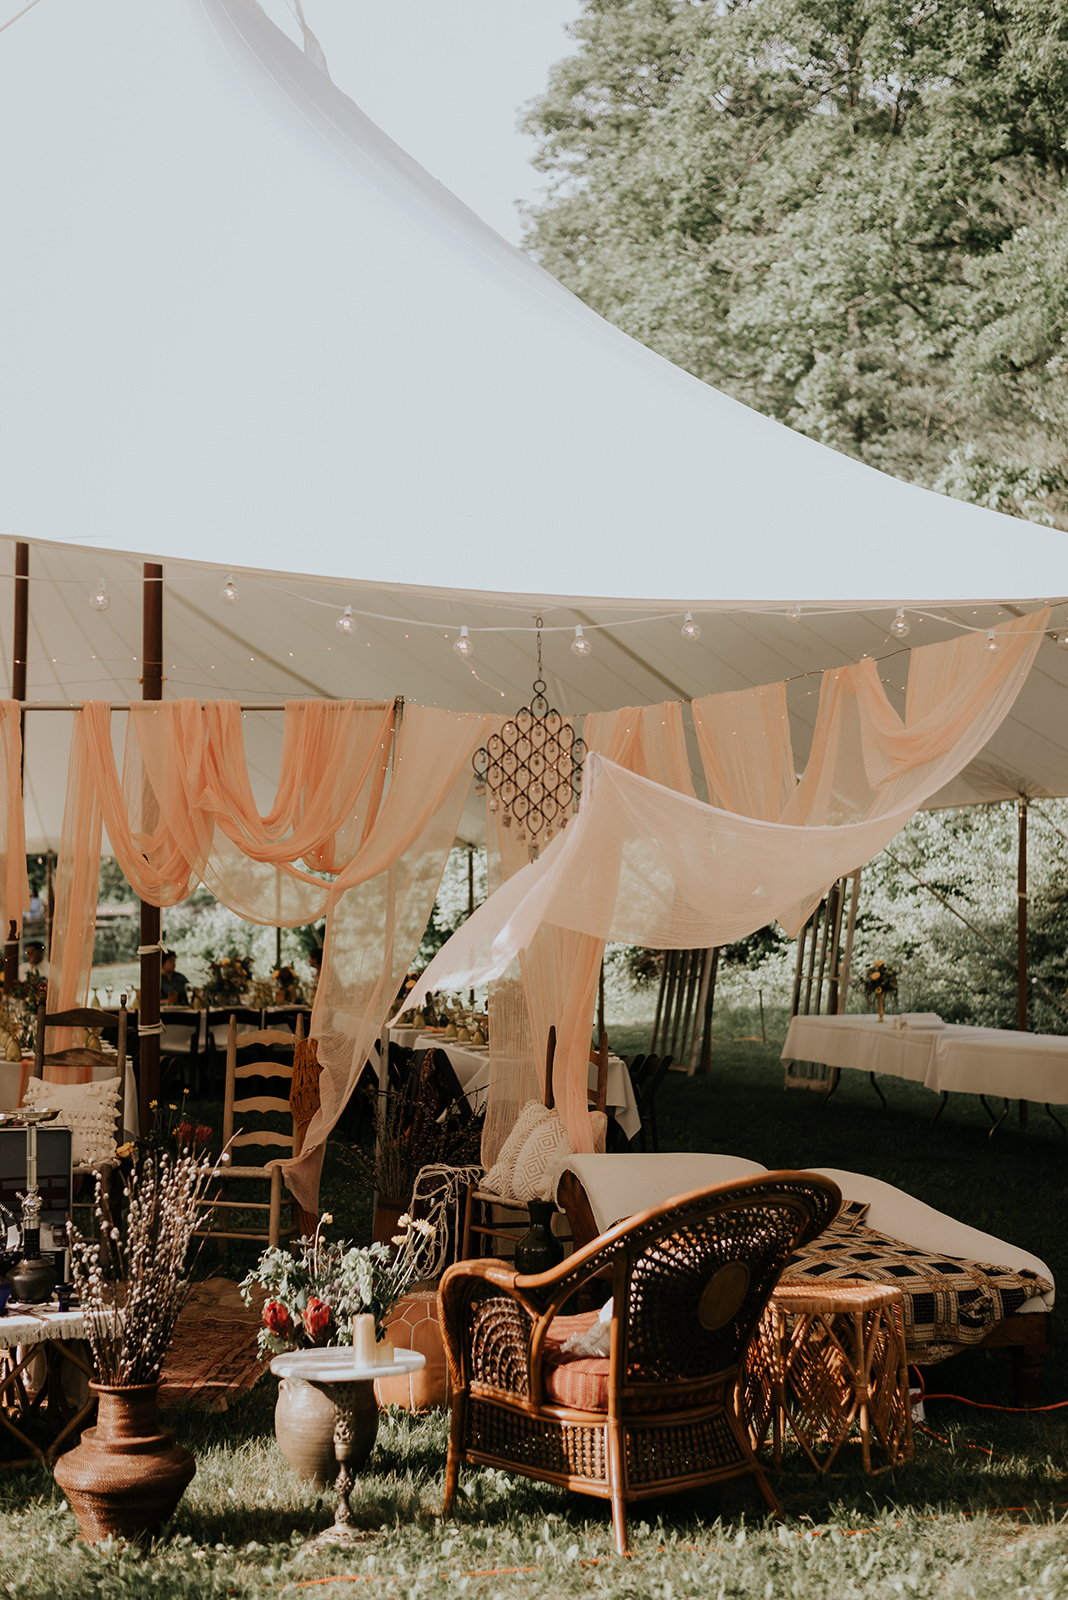 Wedding hookah lounge underneath the tent - Pearl Weddings & Events